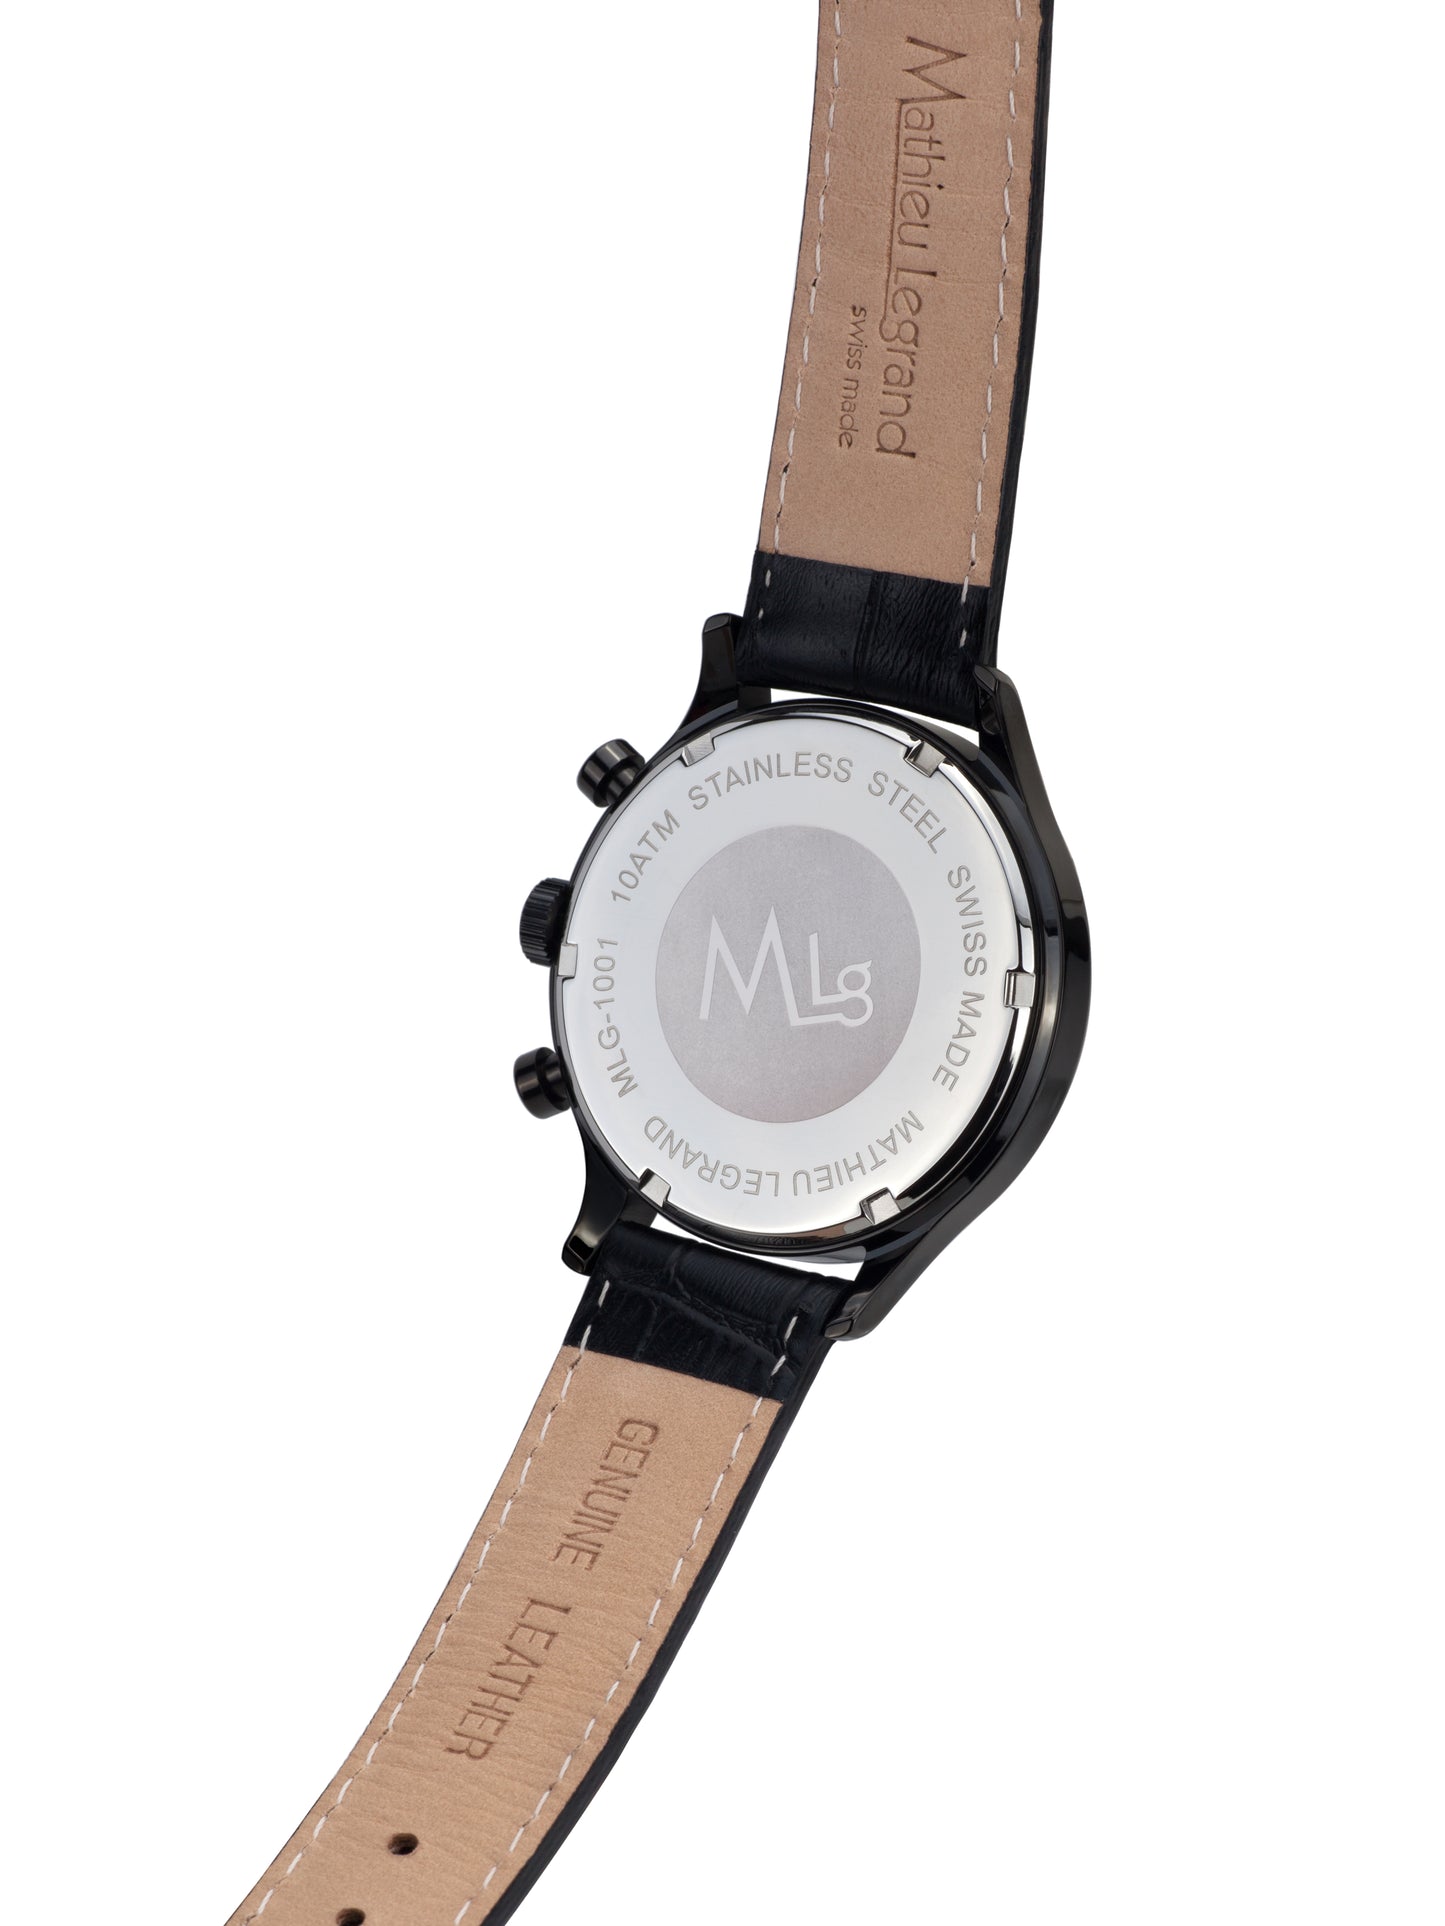 Automatic watches — Orbite Polaire — Mathieu Legrand — black IP leather